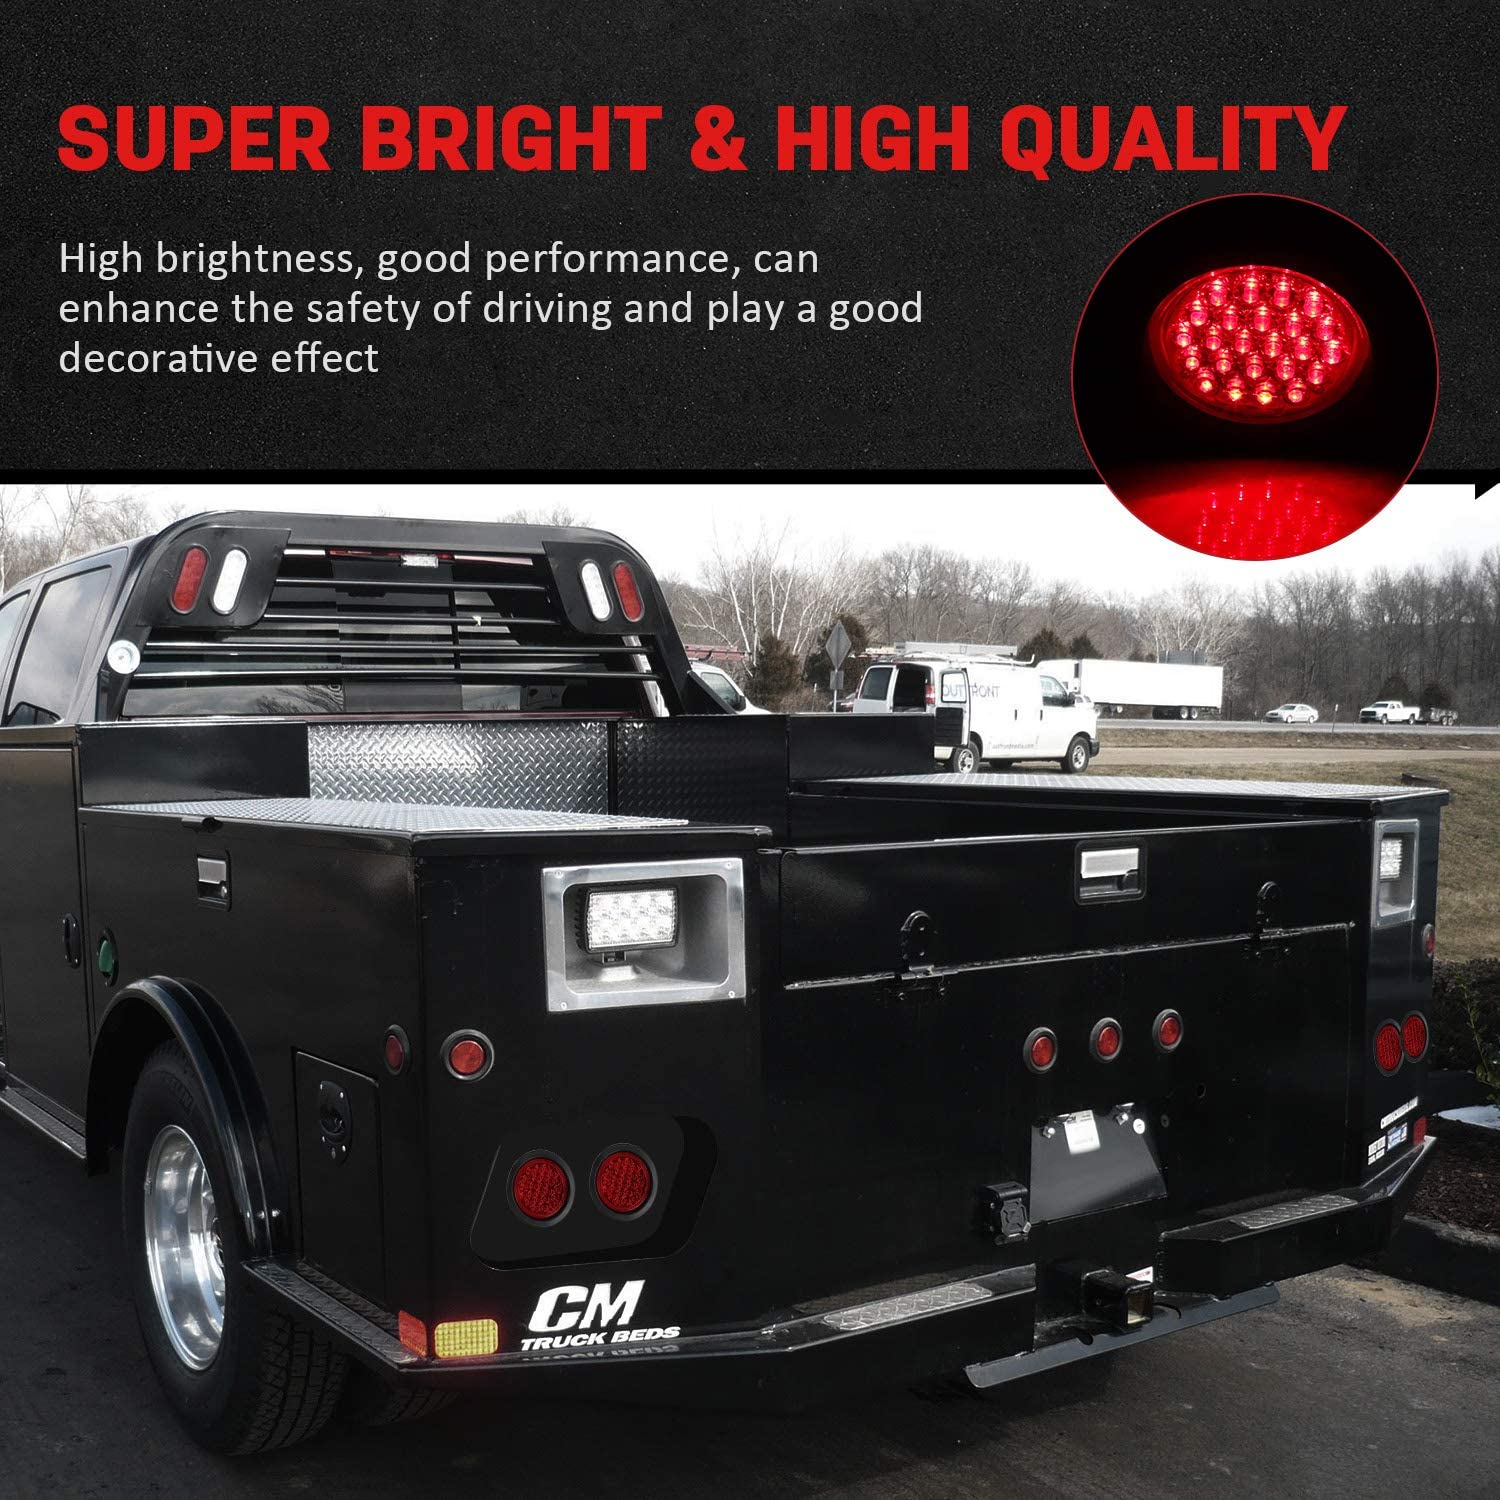 6PCS Red 24LED Round Tail/Side Marker Light 12V Surface Mount for Truck Trailer